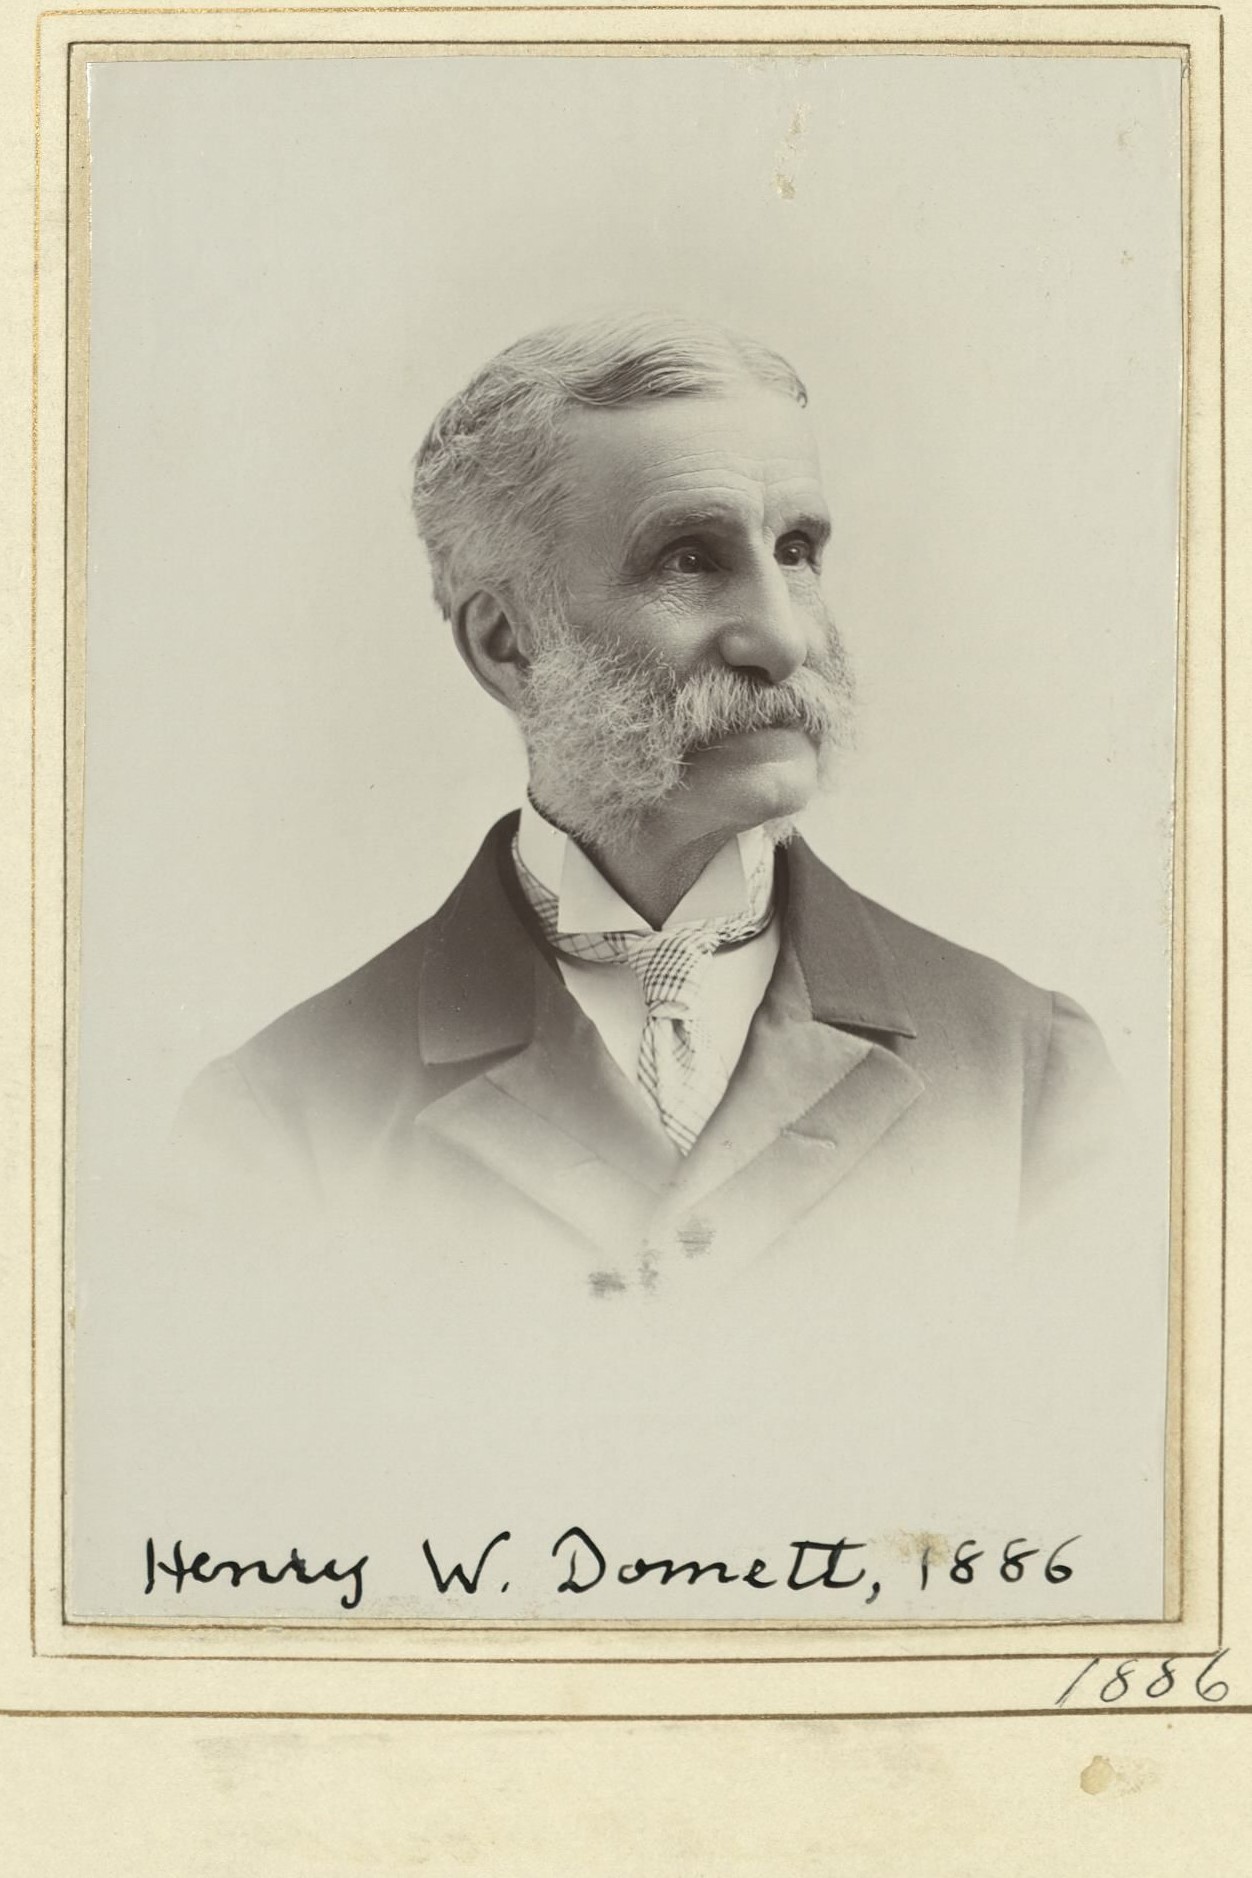 Member portrait of Henry W. Domett